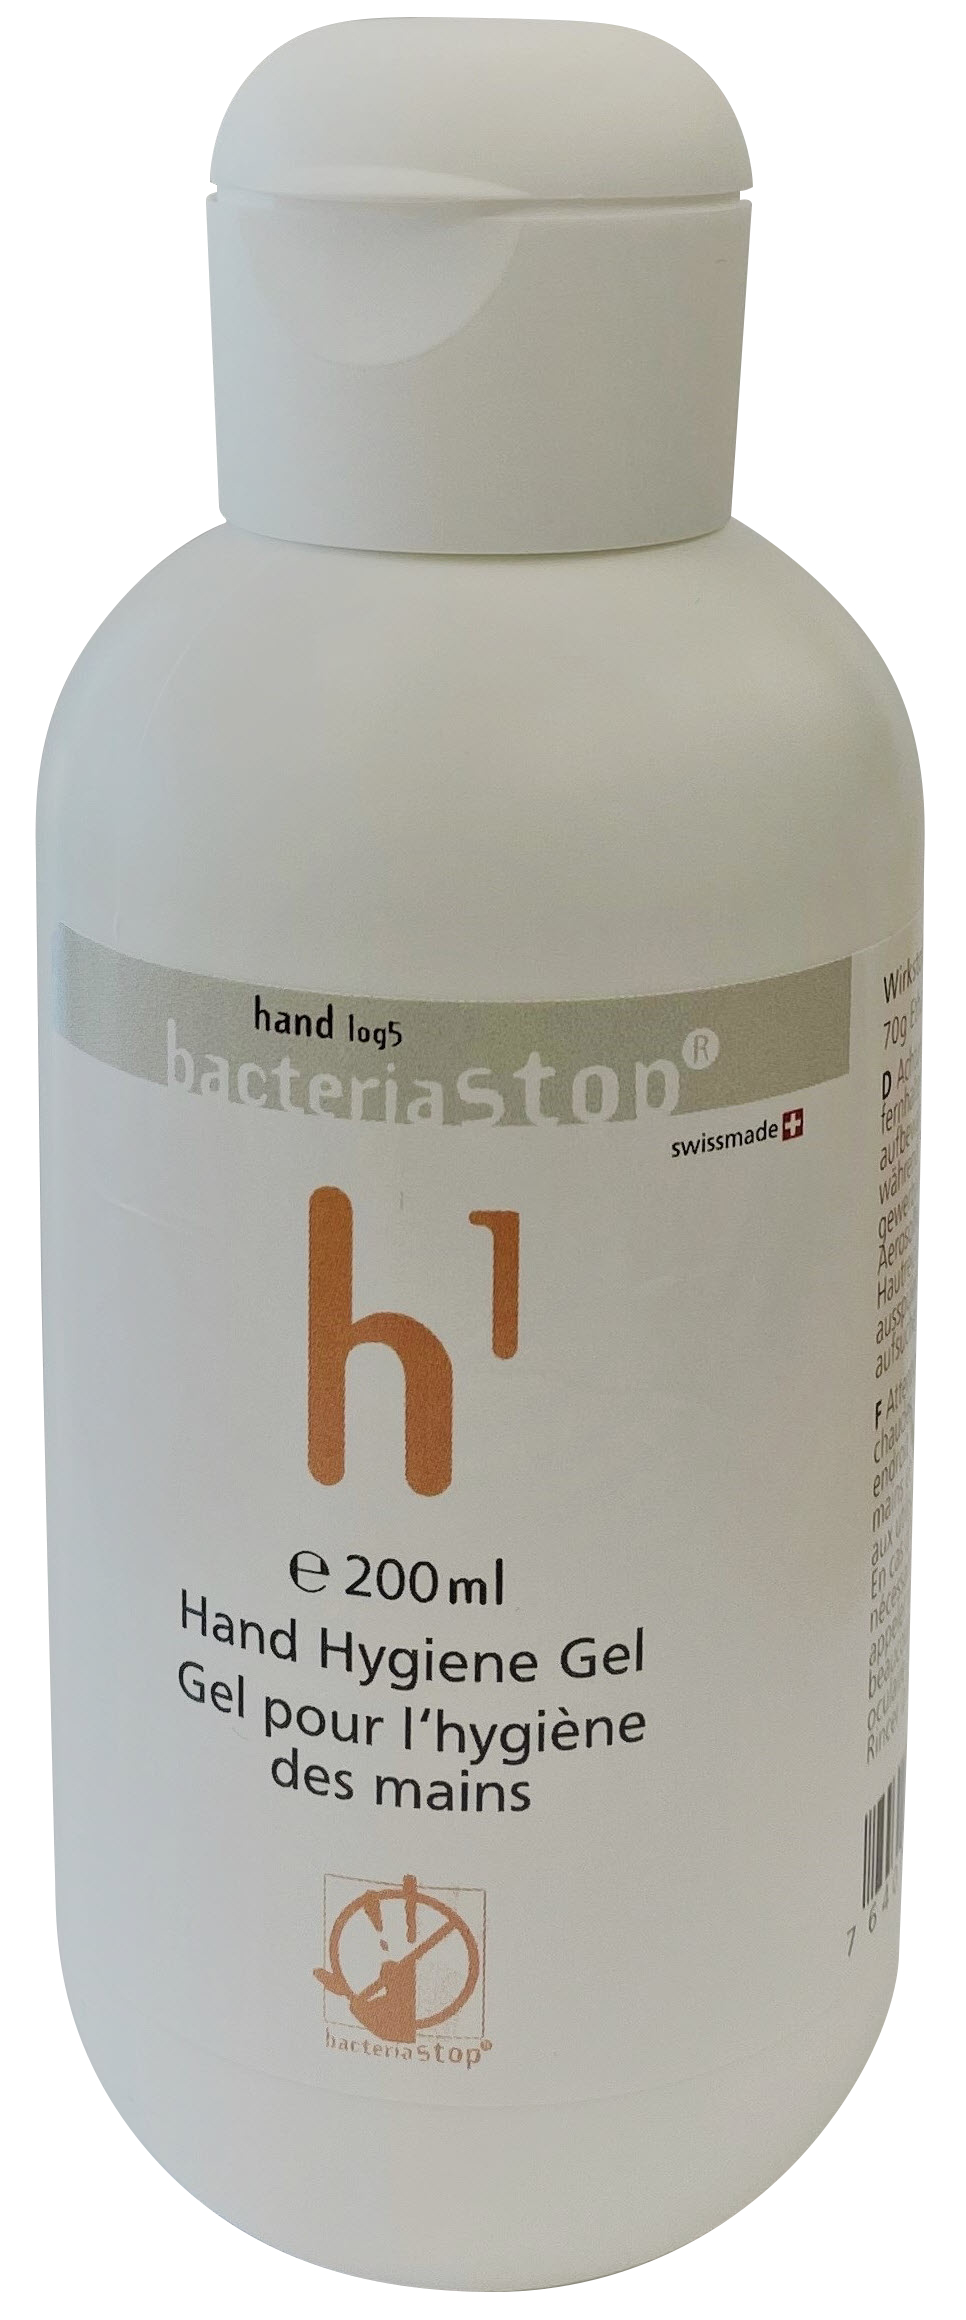 BACTERIASTOP Hand Hygiene Gel 01-H1-200ML 200ml